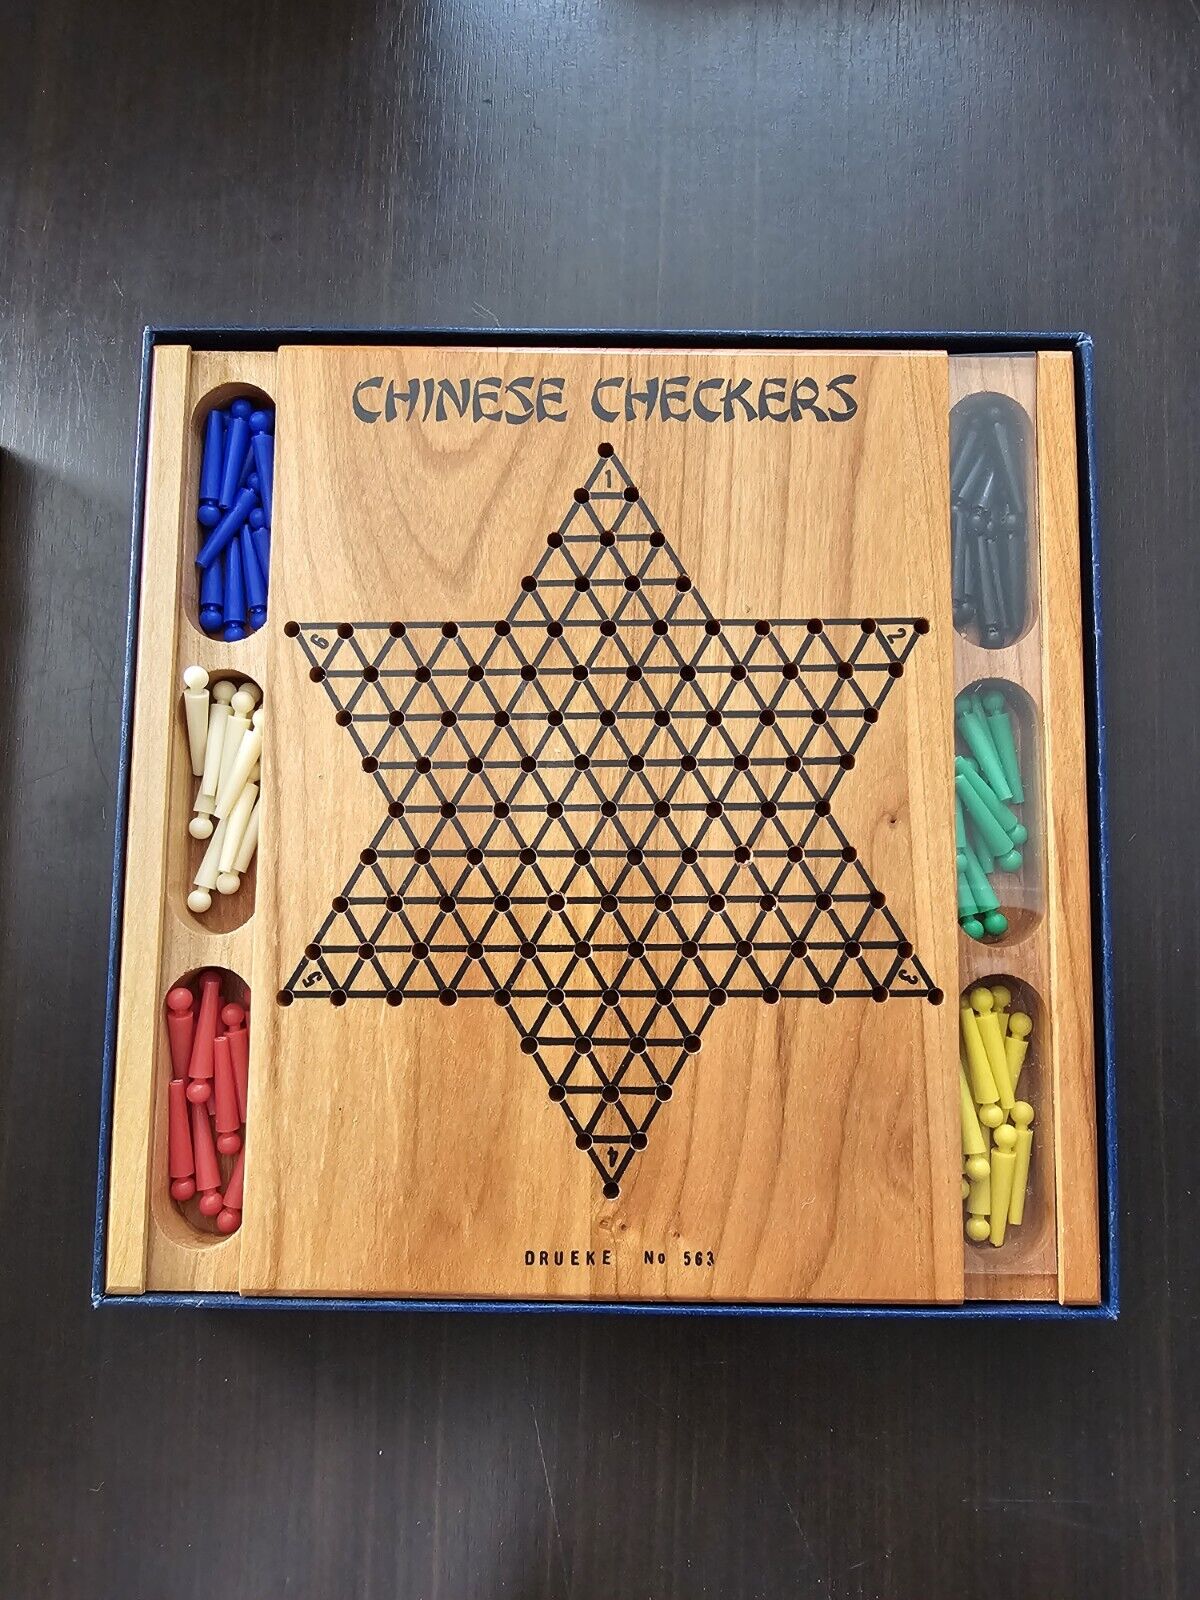 Vintage Chinese Checkers Game No. 563 By Drueke